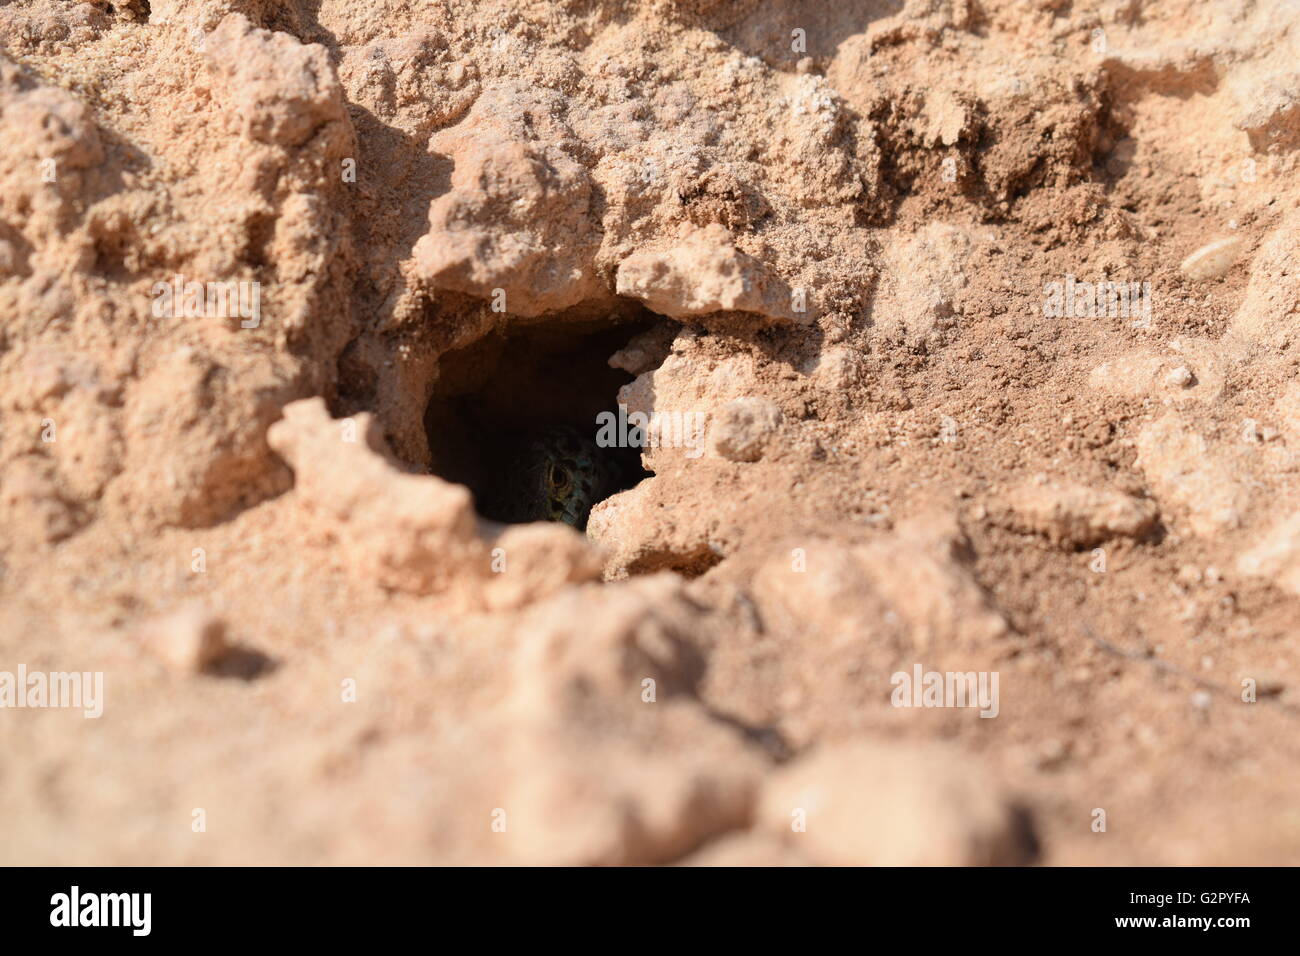 Podarcis Pityusensis Formenterae lizard hiding in nest hole Stock Photo